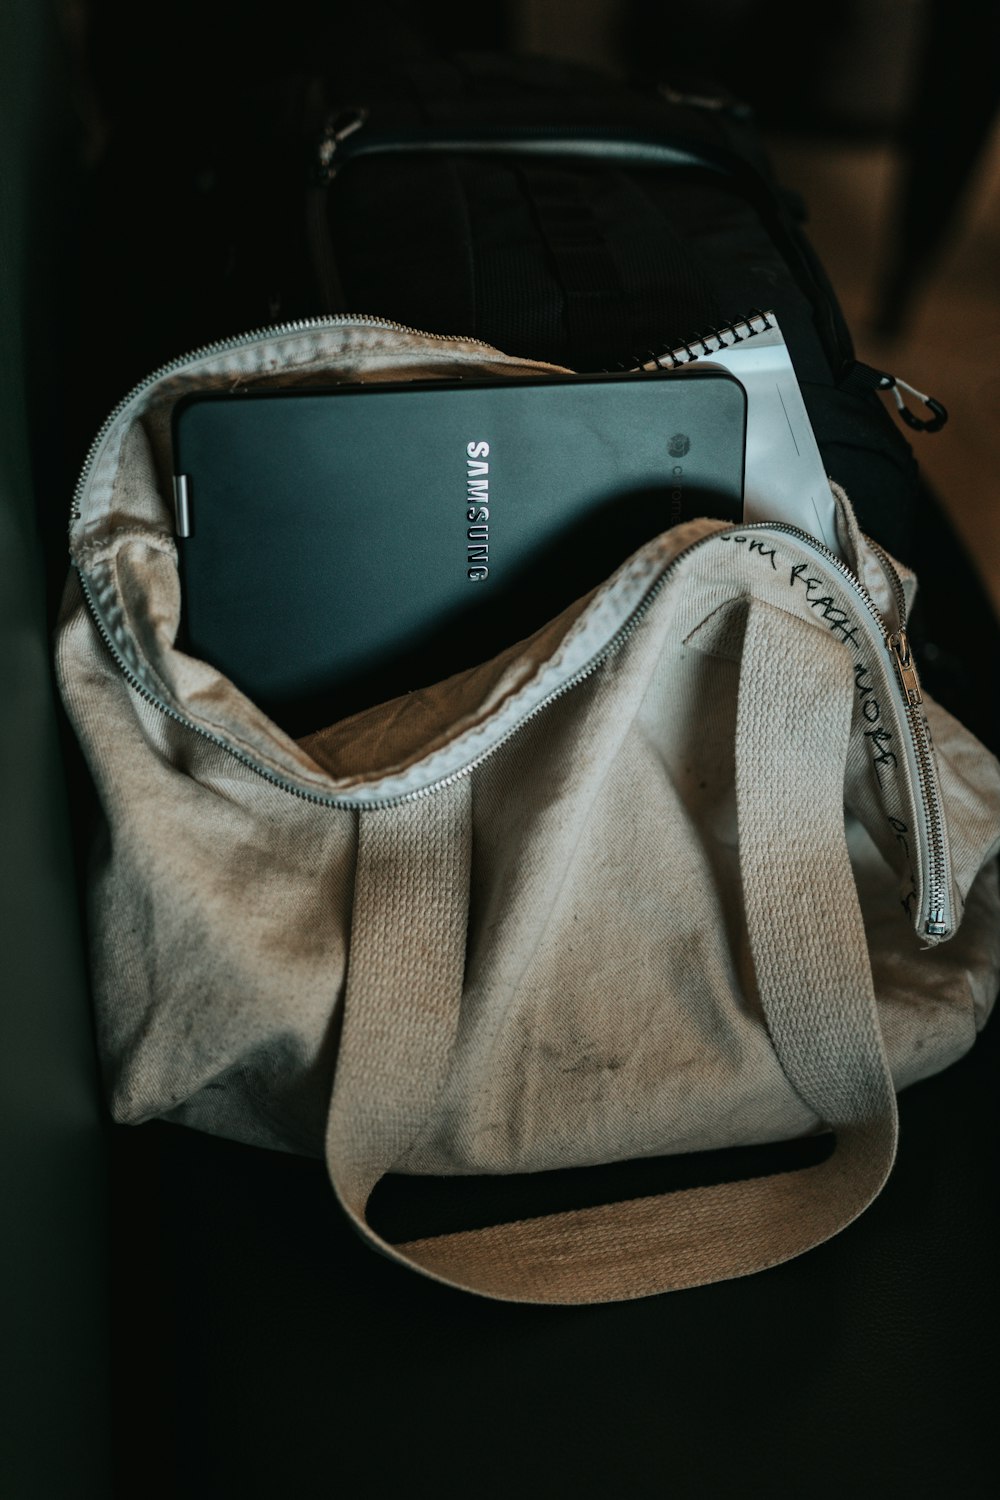 laptop Samsung nero in borsa marrone